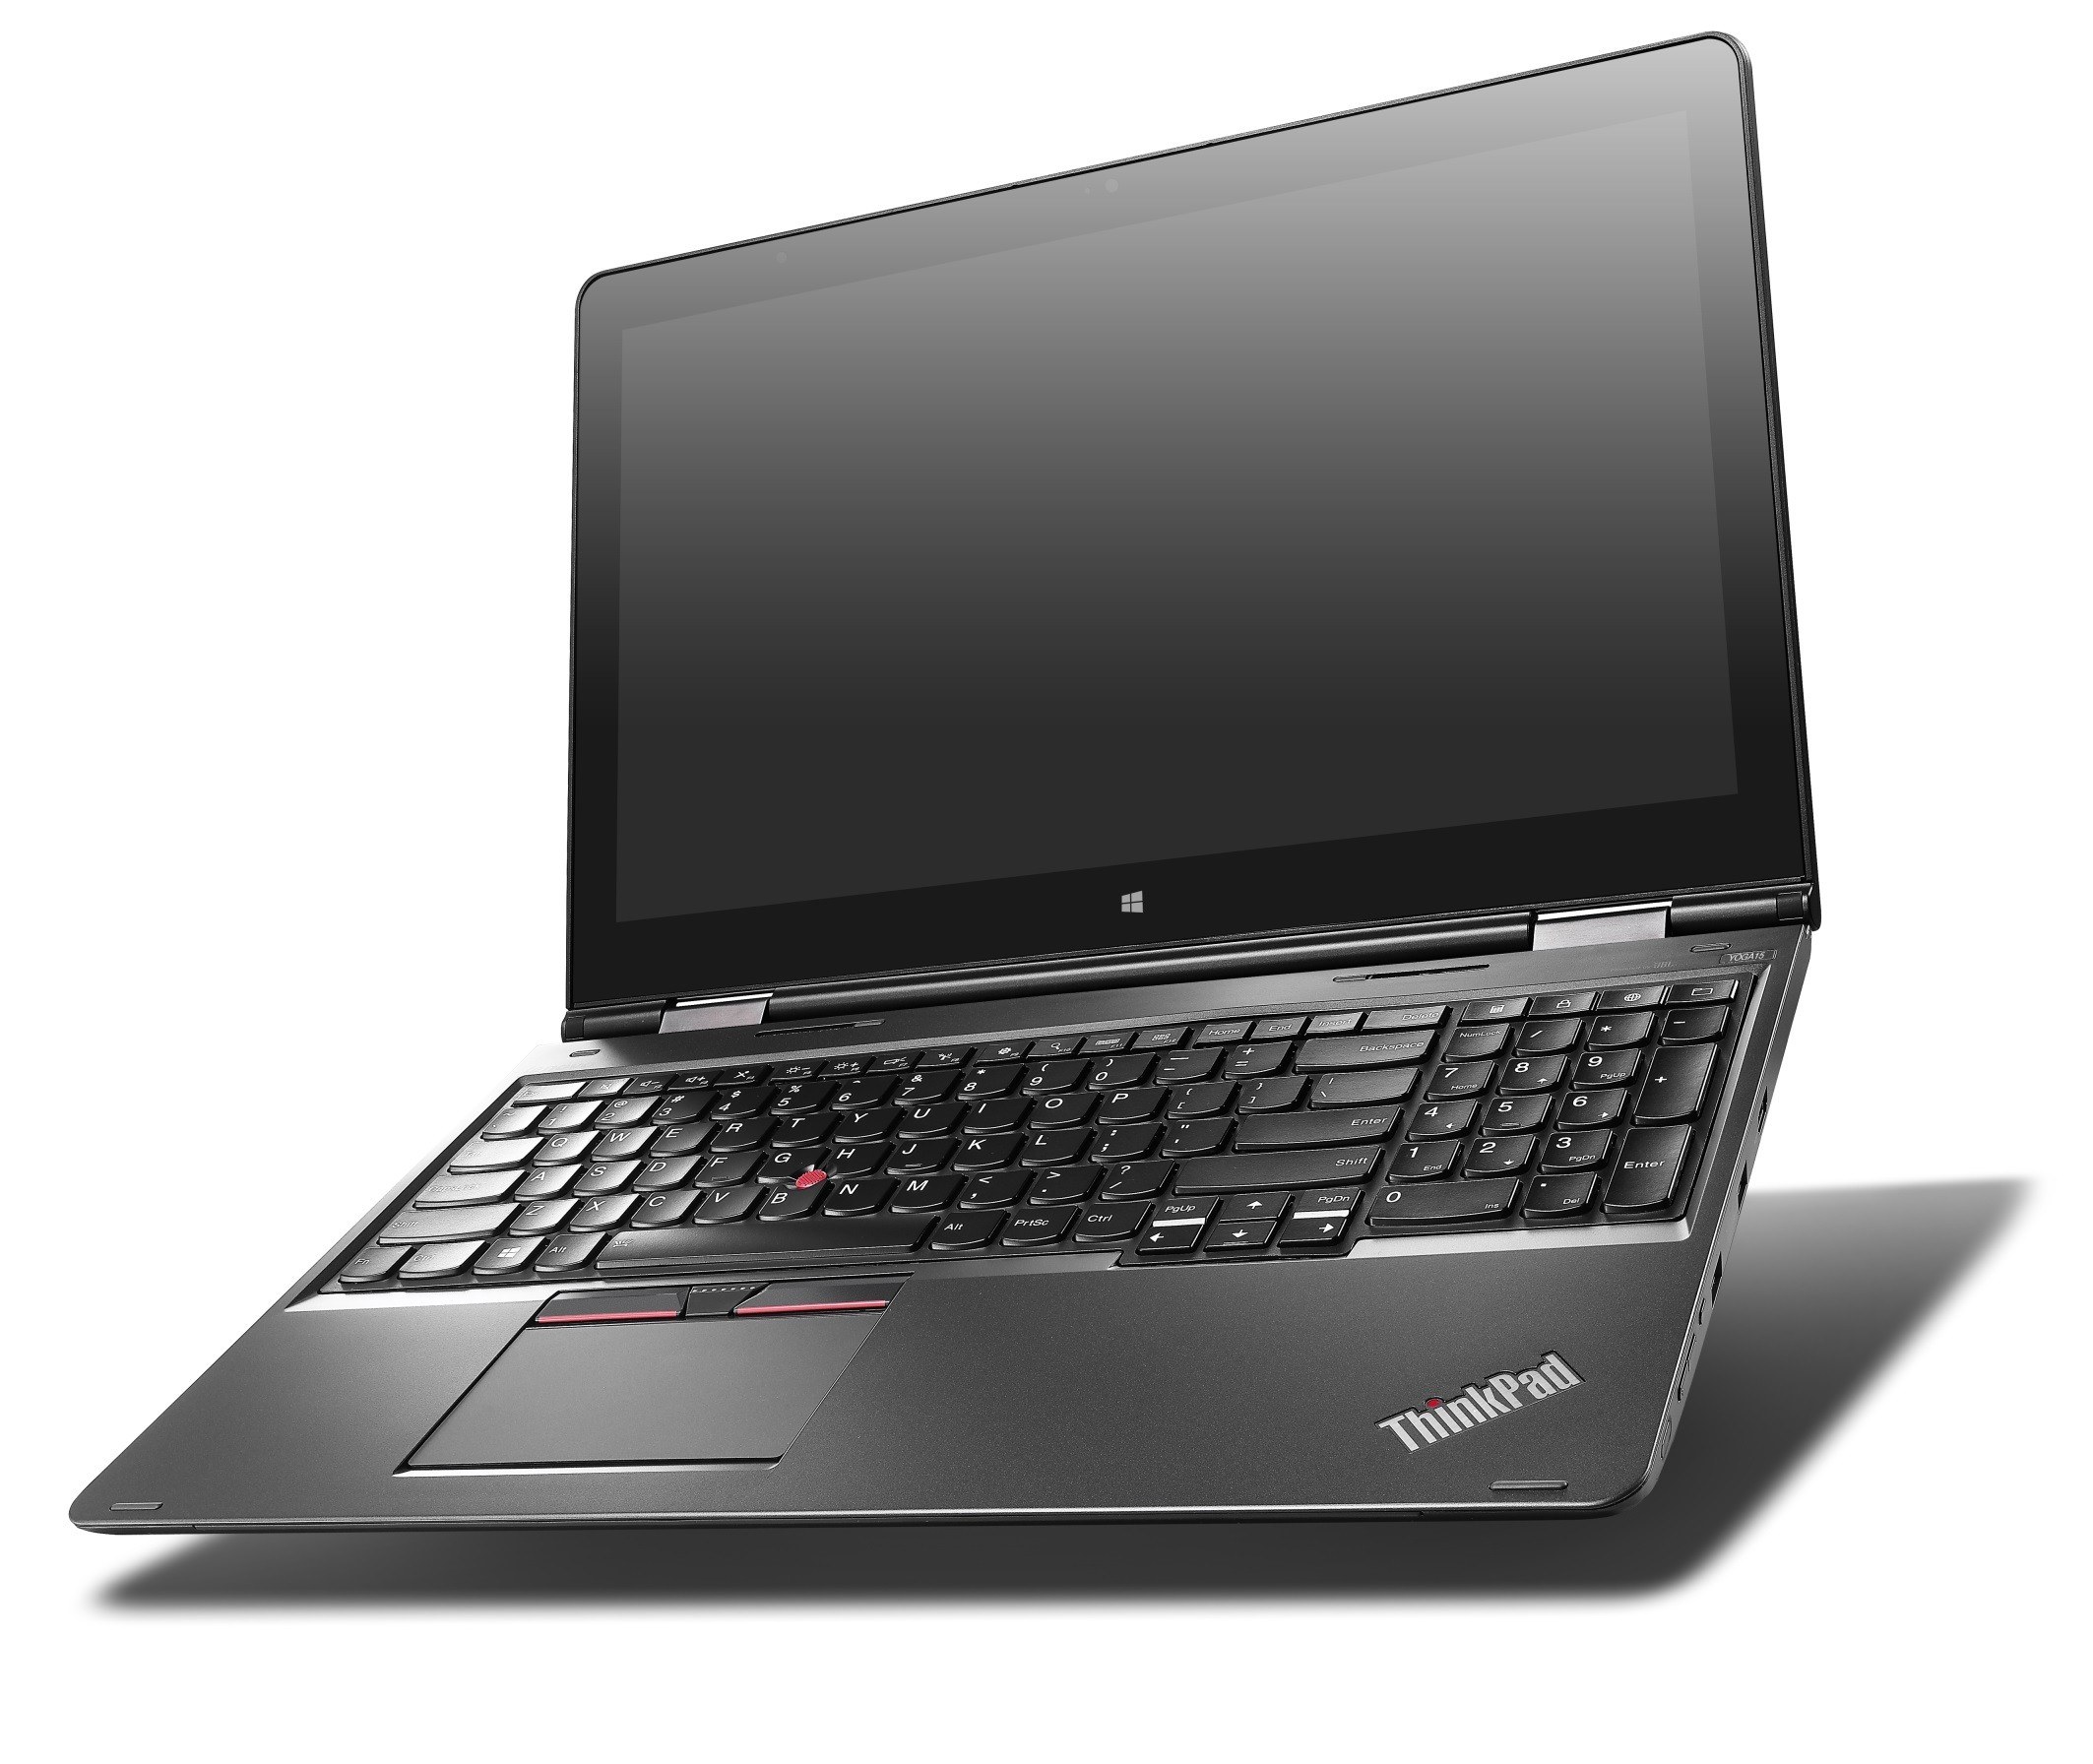 Bán Laptop Lenovo ThinkPad Yoga 14 i5-6200U Giá Sỉ  đ